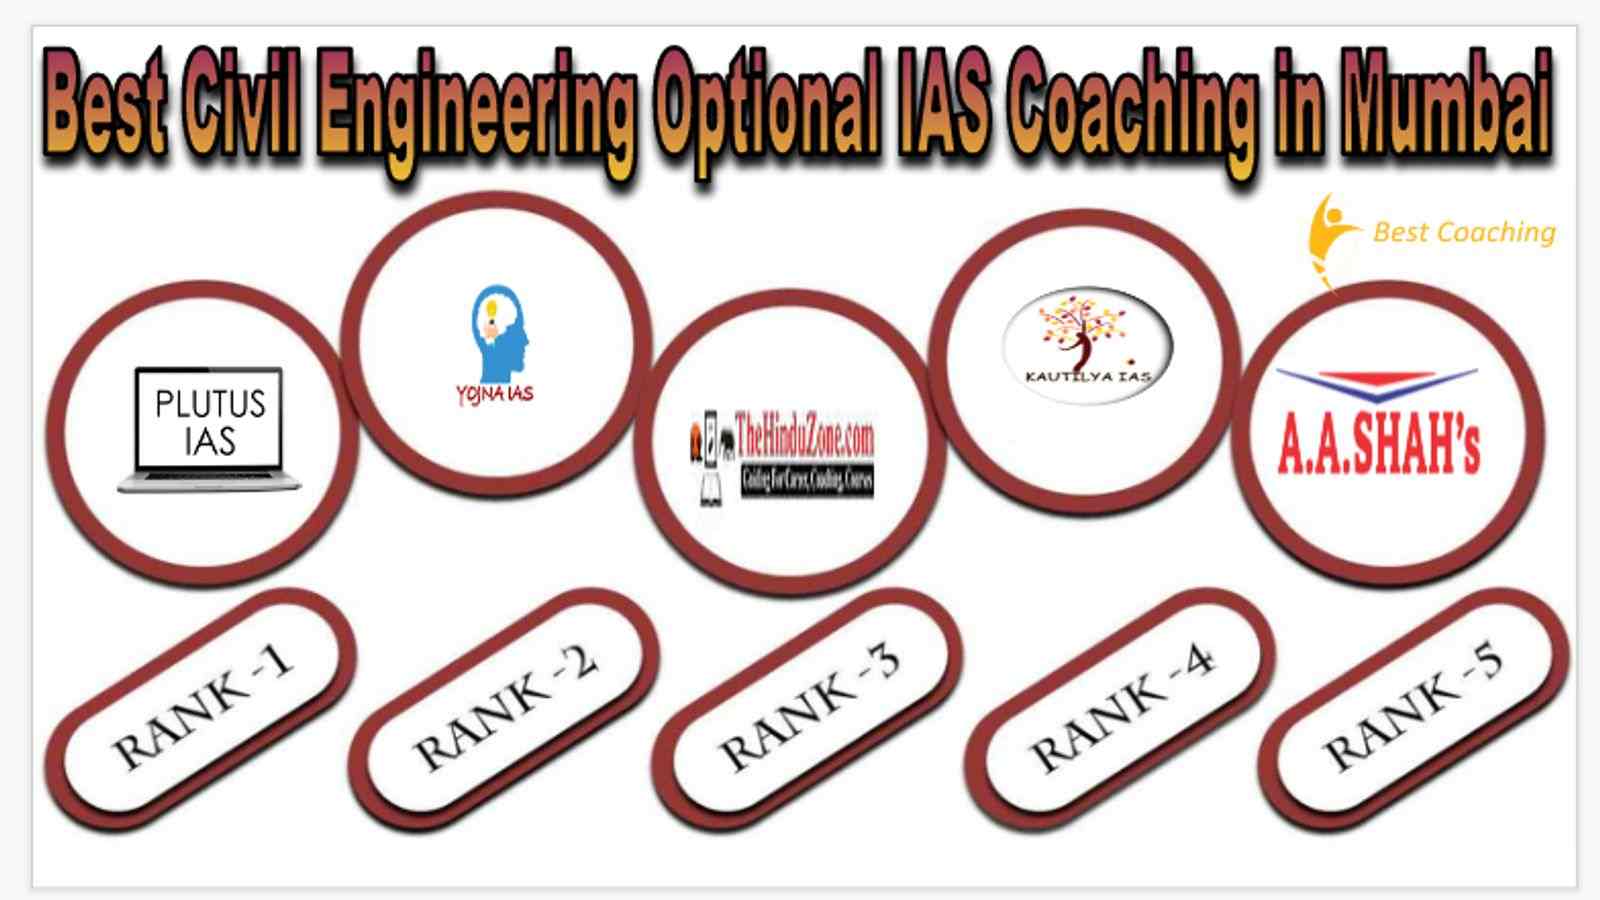 Best Civil Engineering Optional IAS Coaching in Mumbai